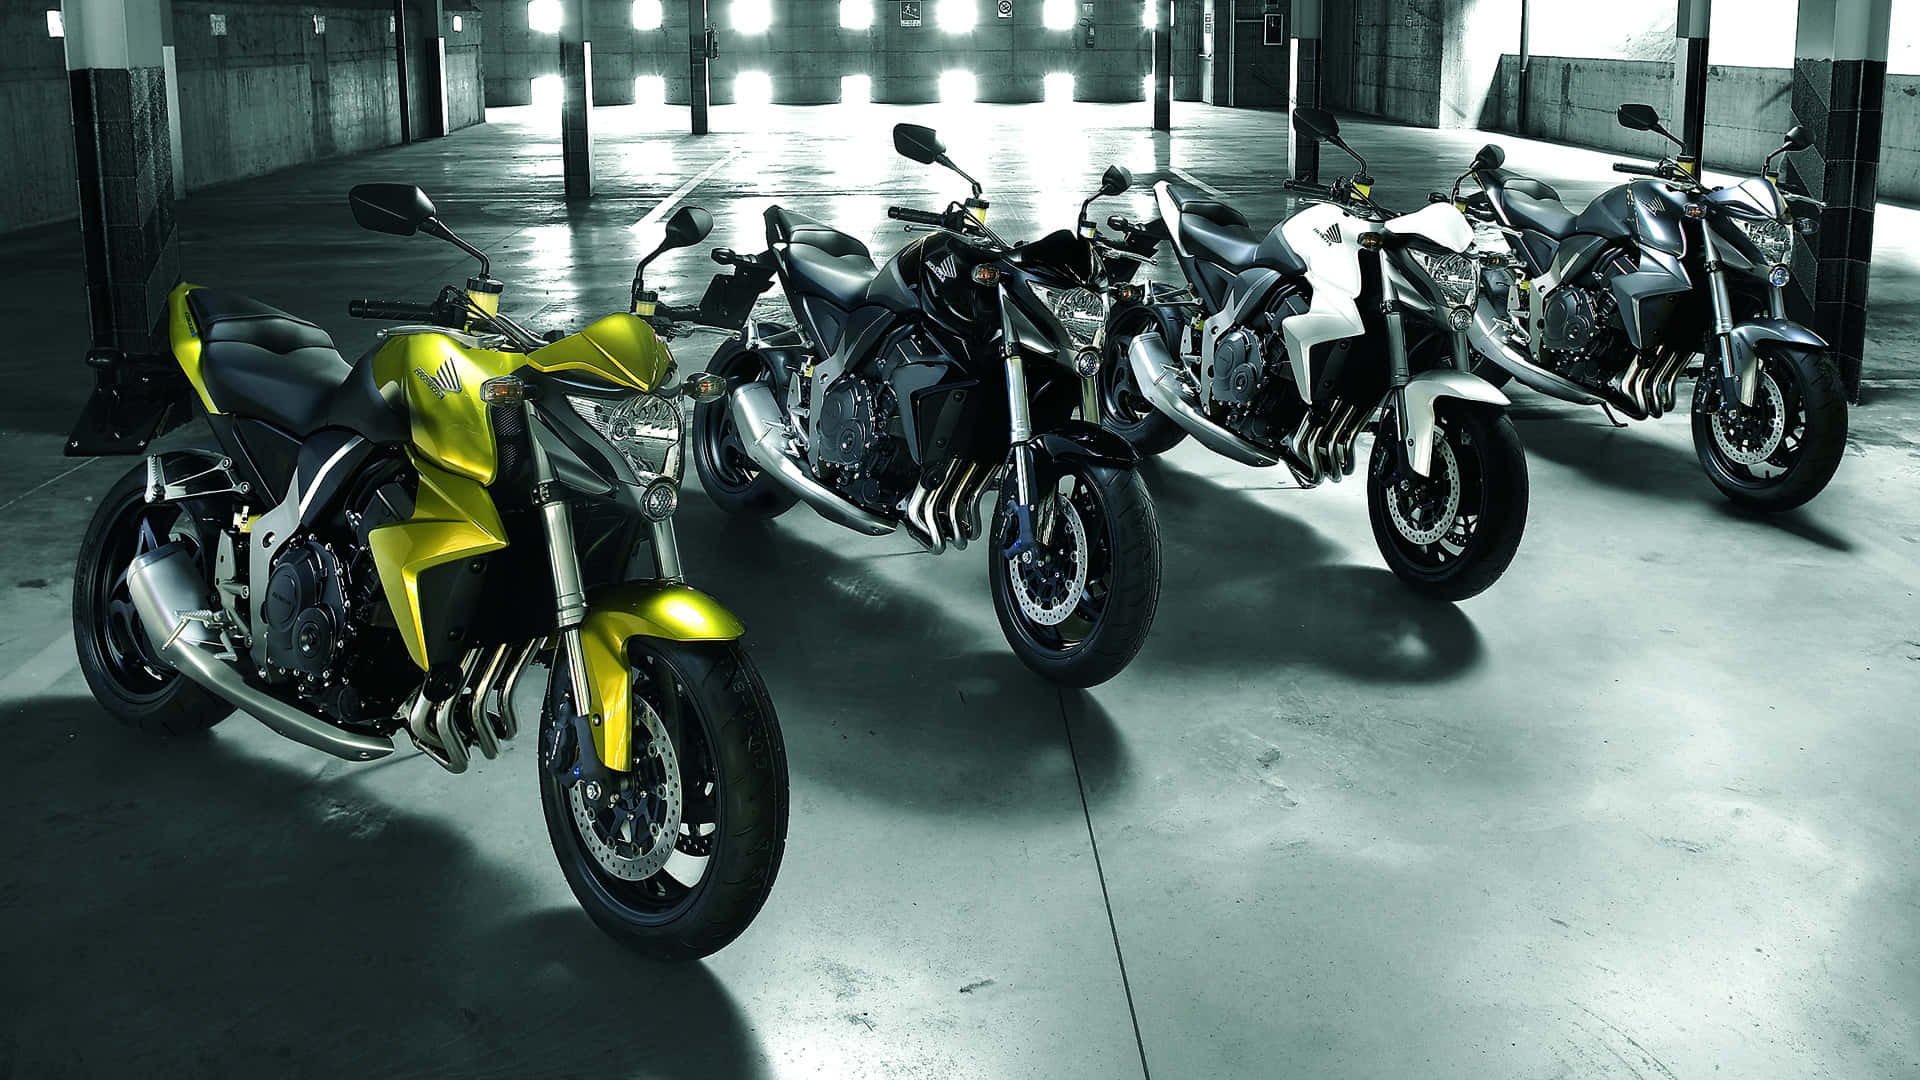 Stunning Honda Motorcycle In Action Wallpaper